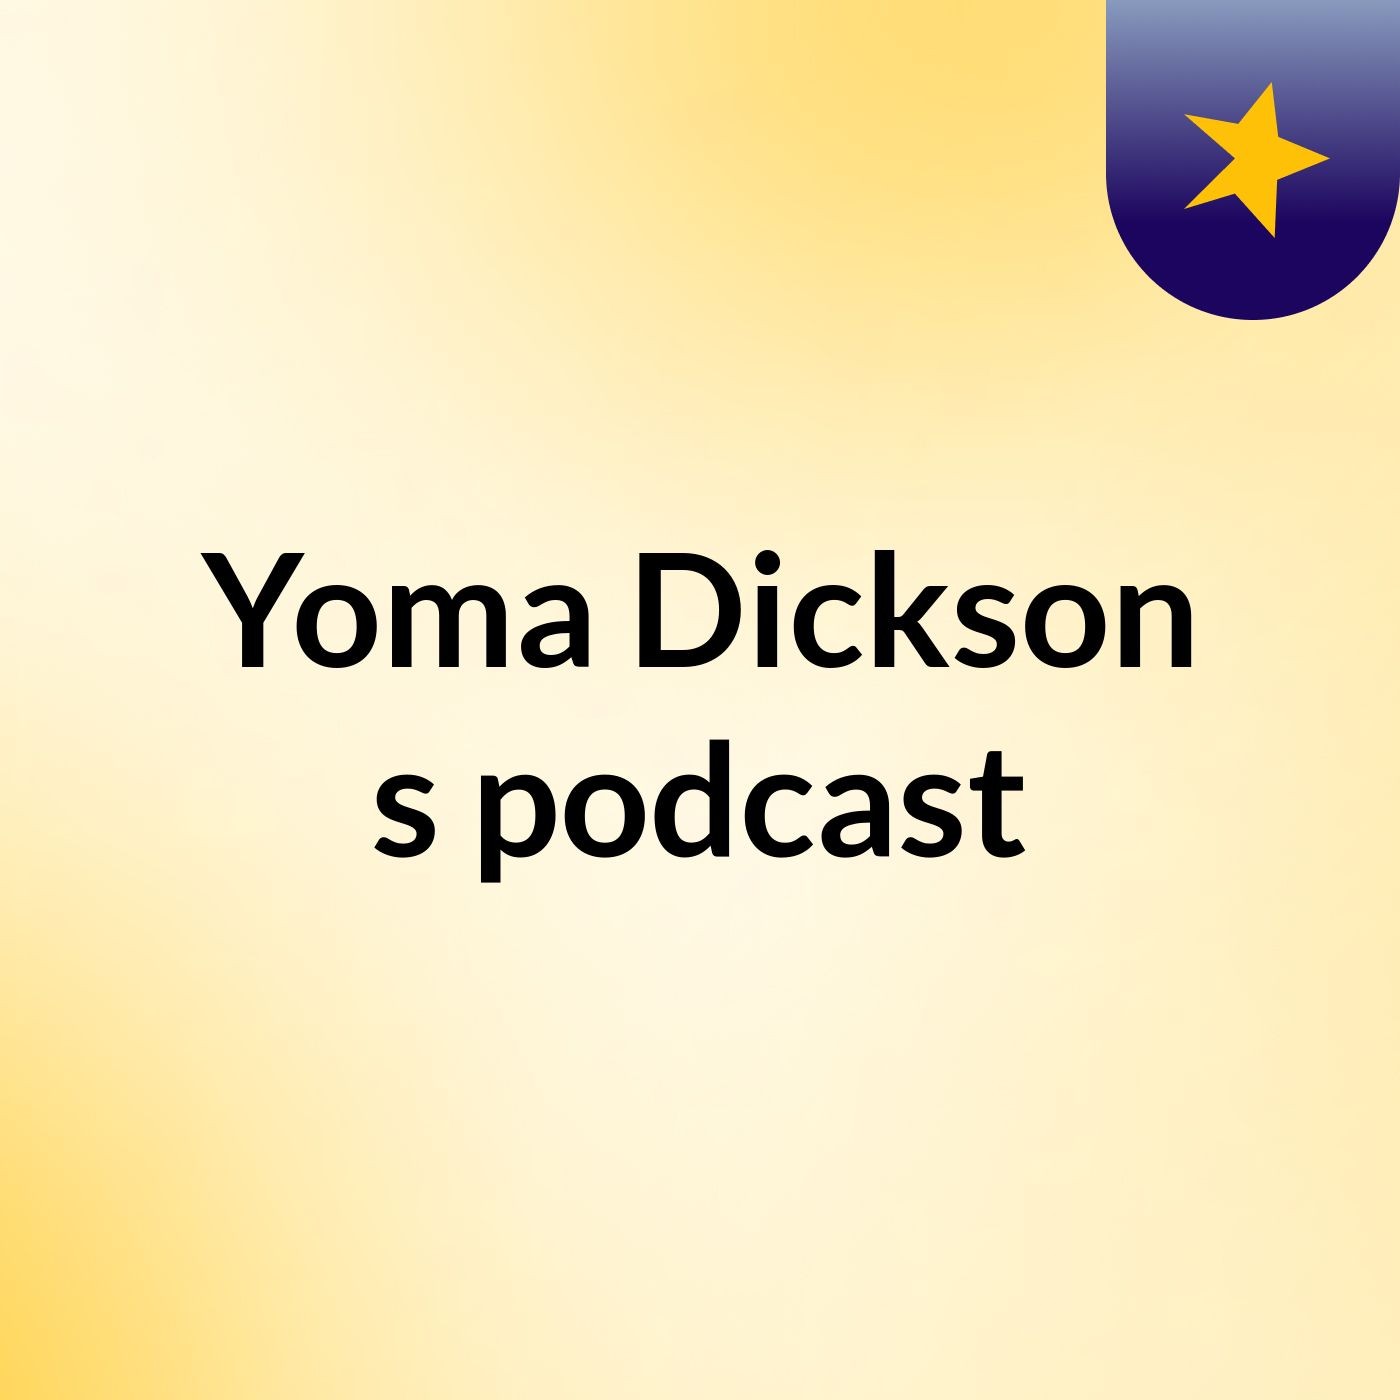 Yoma Dickson's podcast